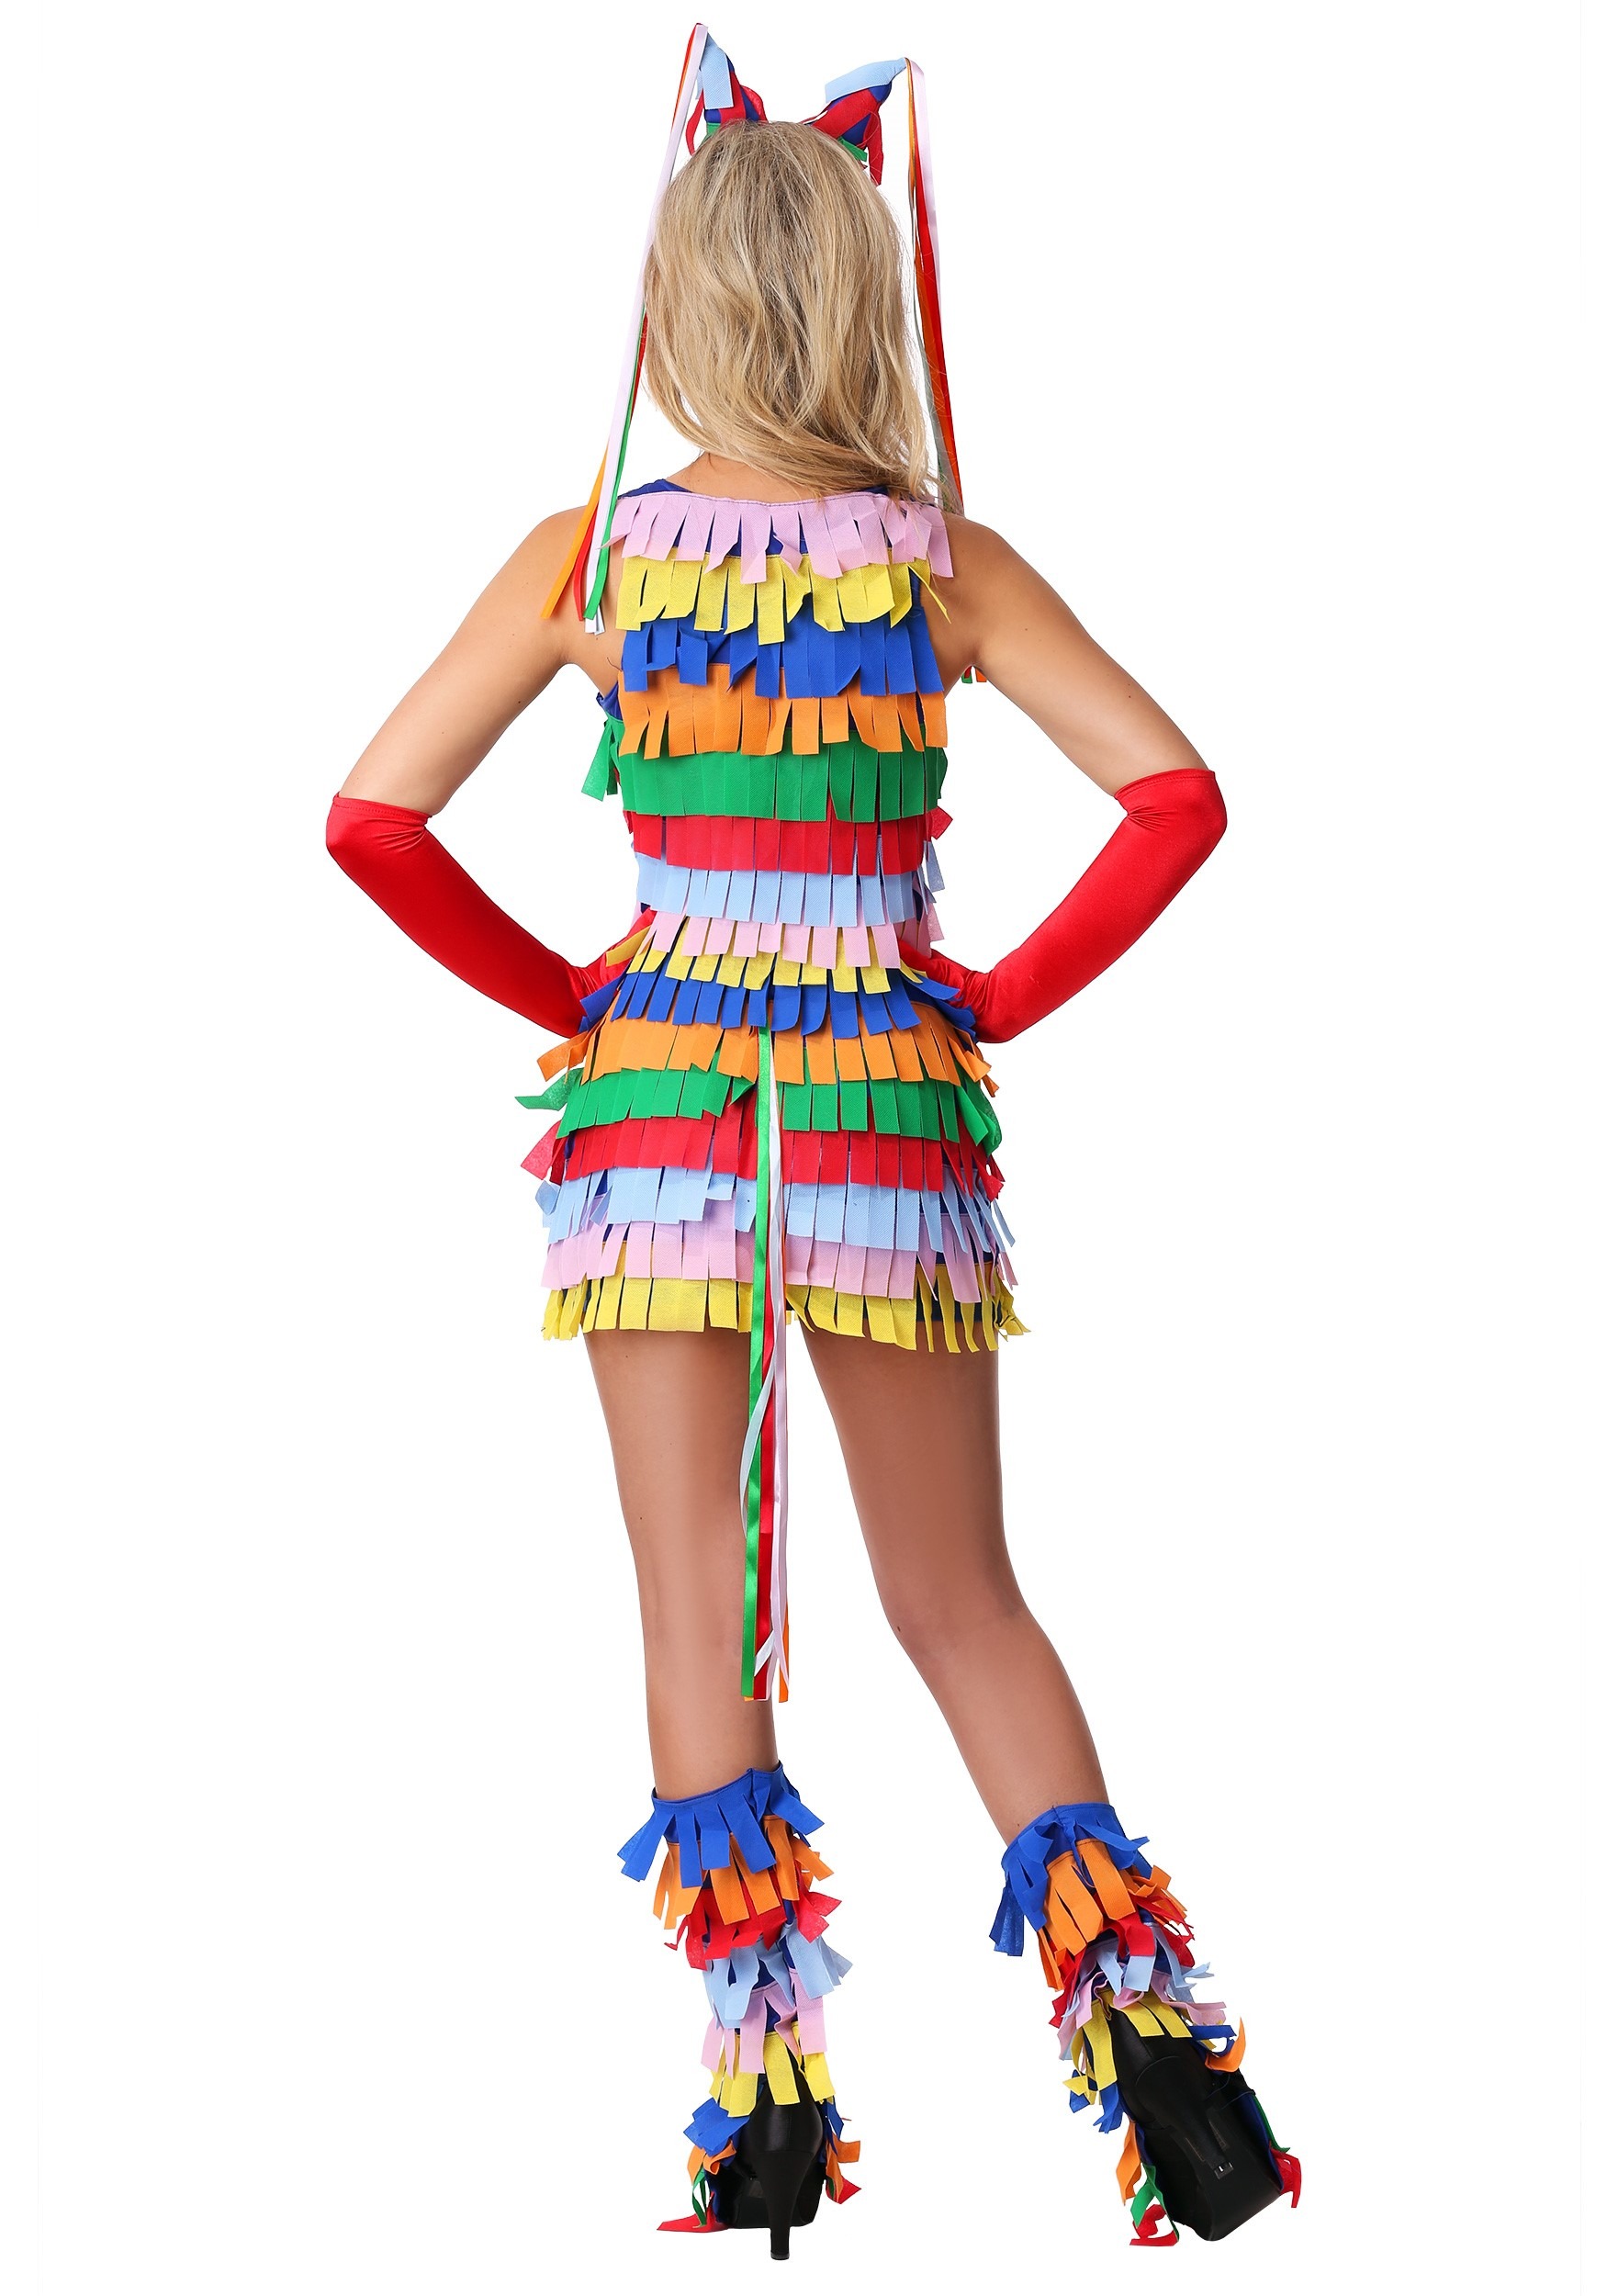 Plus Size Sexy Piñata Fancy Dress Costume , Holiday Fancy Dress Costumes